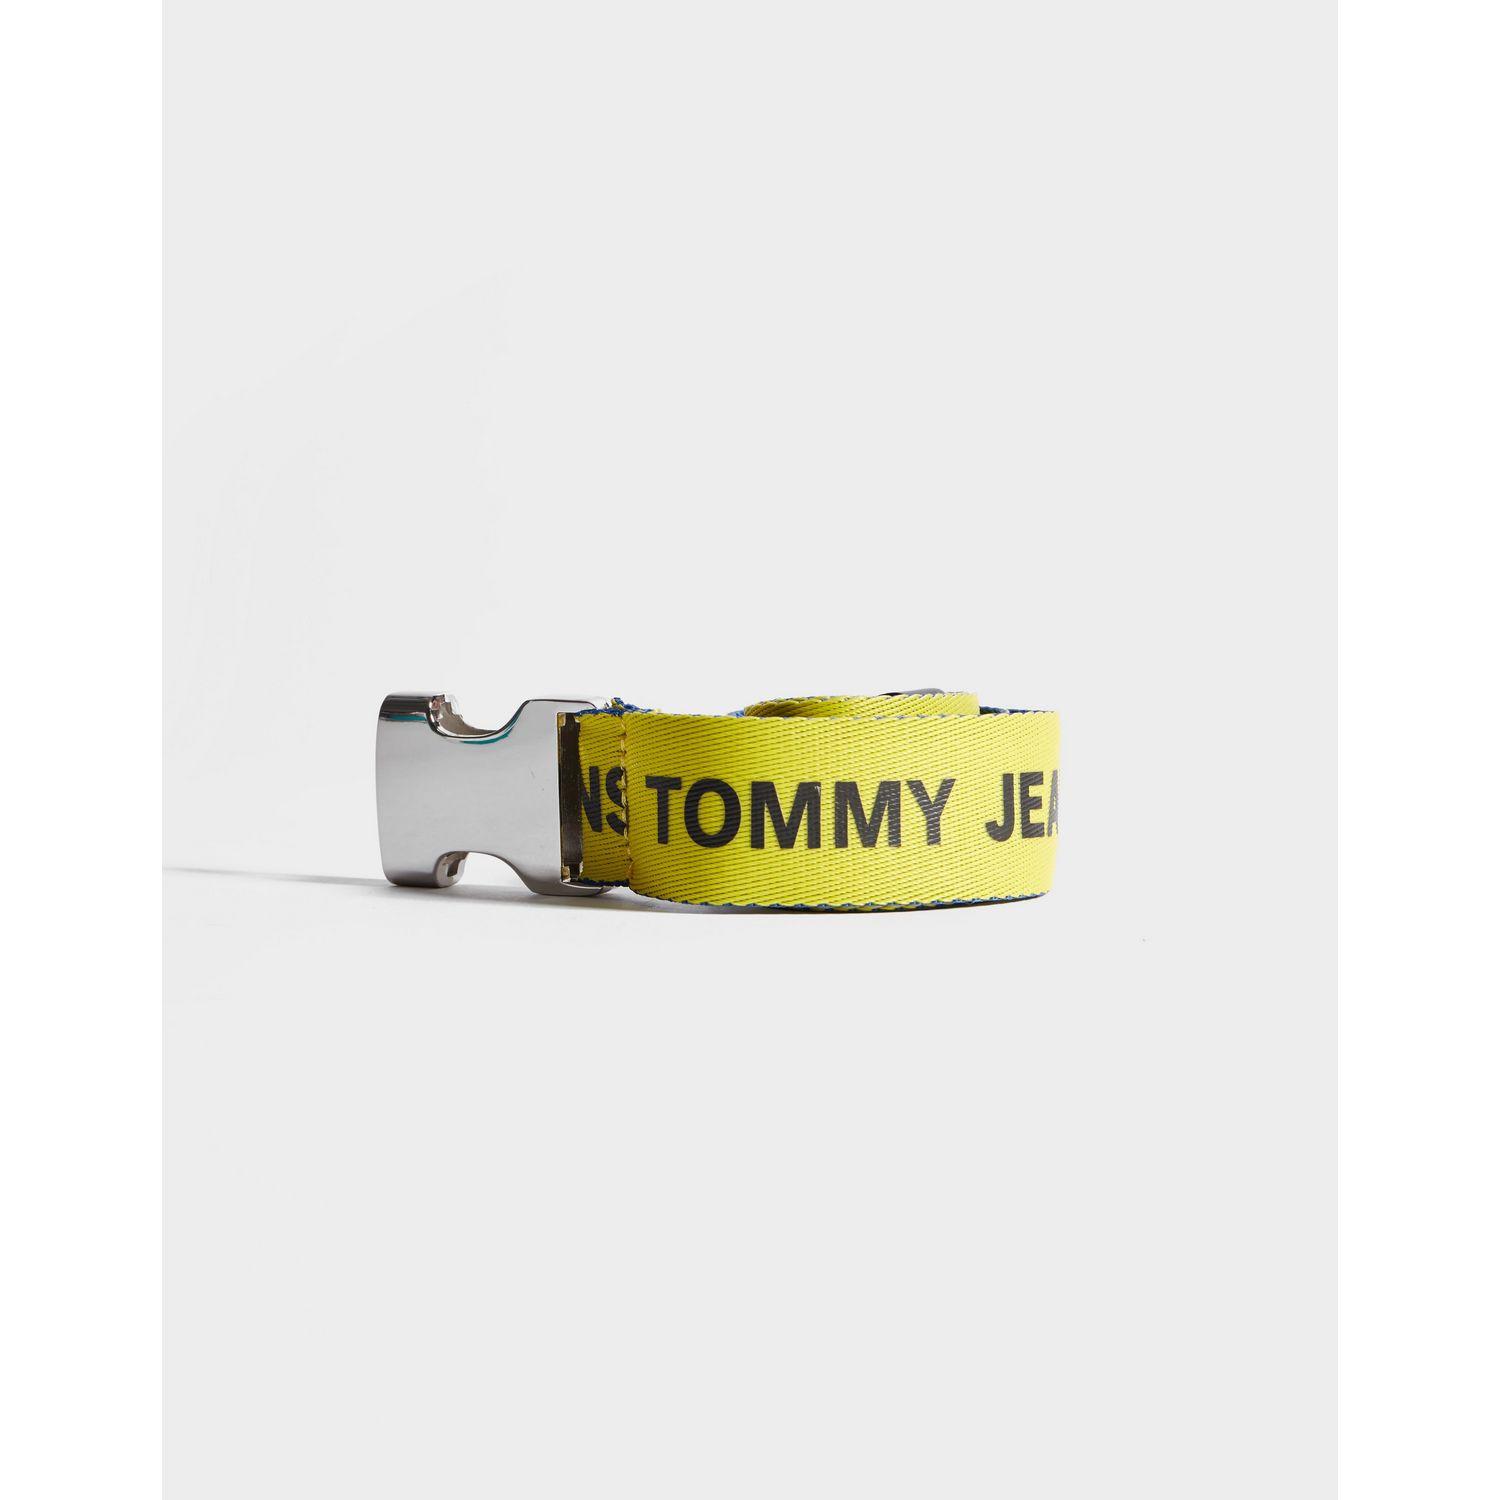 yellow tommy hilfiger belt